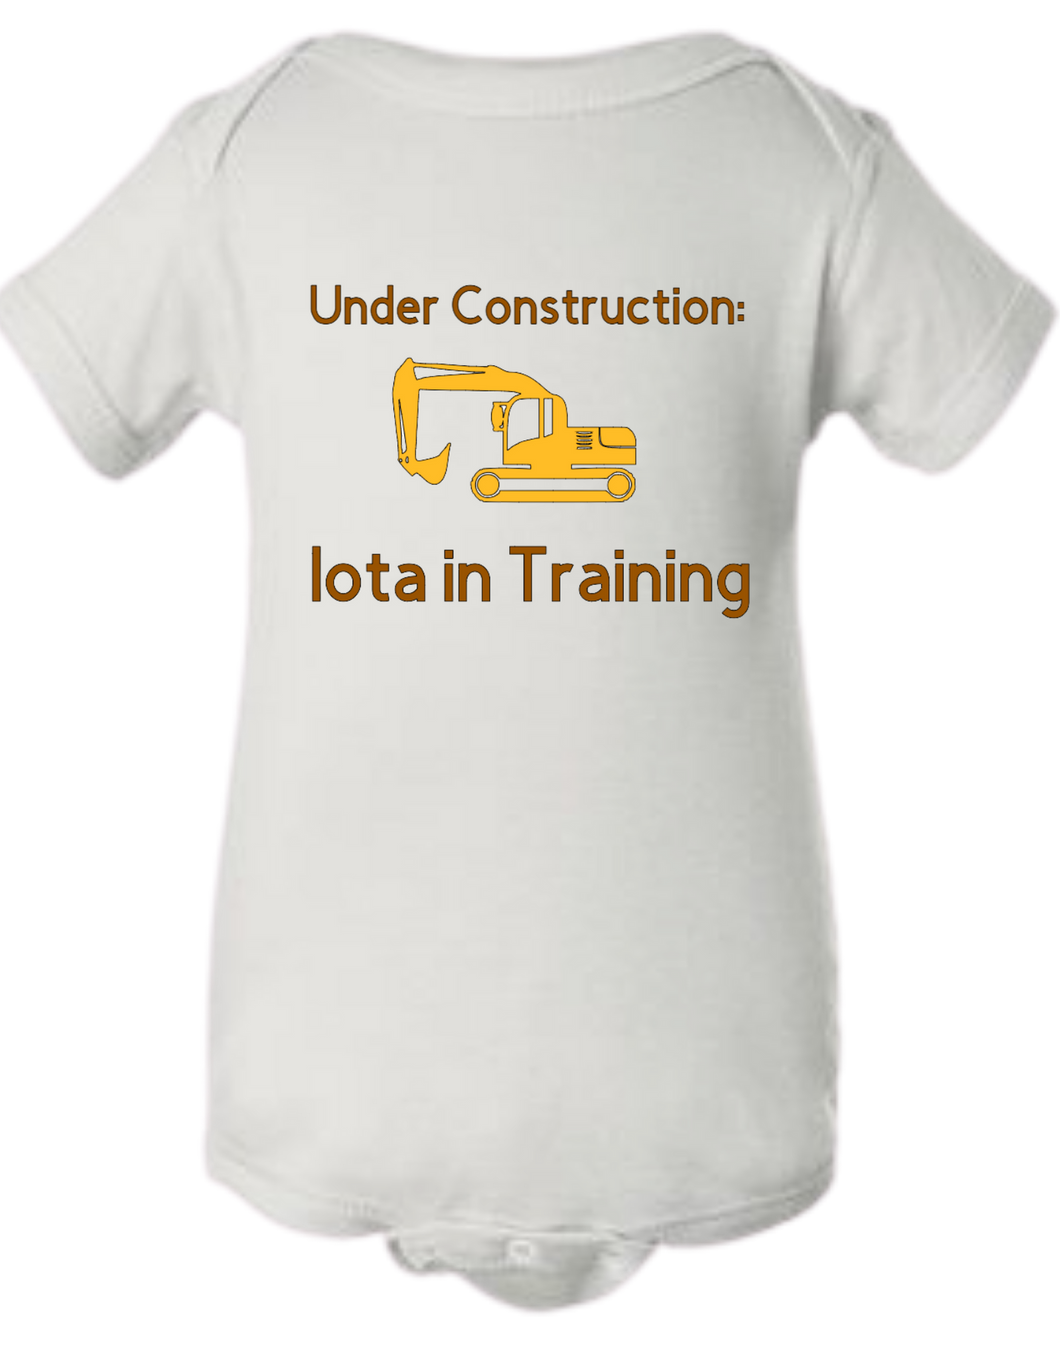 Under Construction 9Z (Iota)